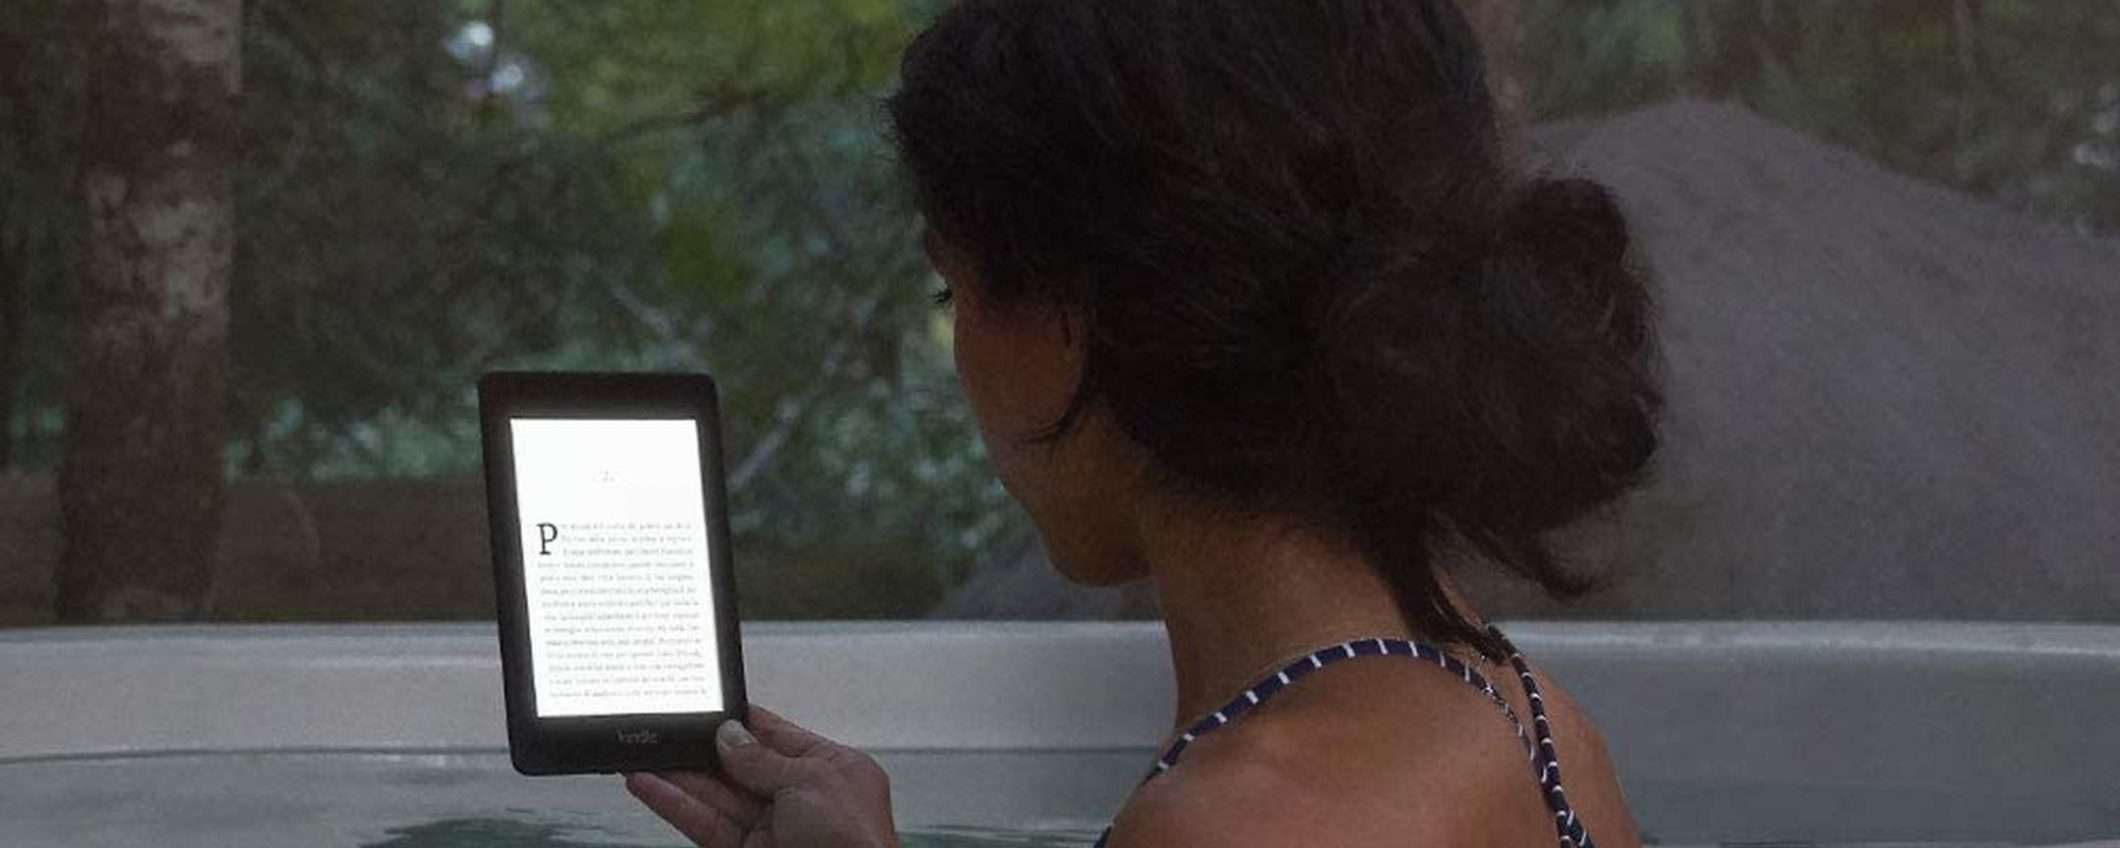 Amazon rivela un Kindle Paperwhite da 6,8 pollici